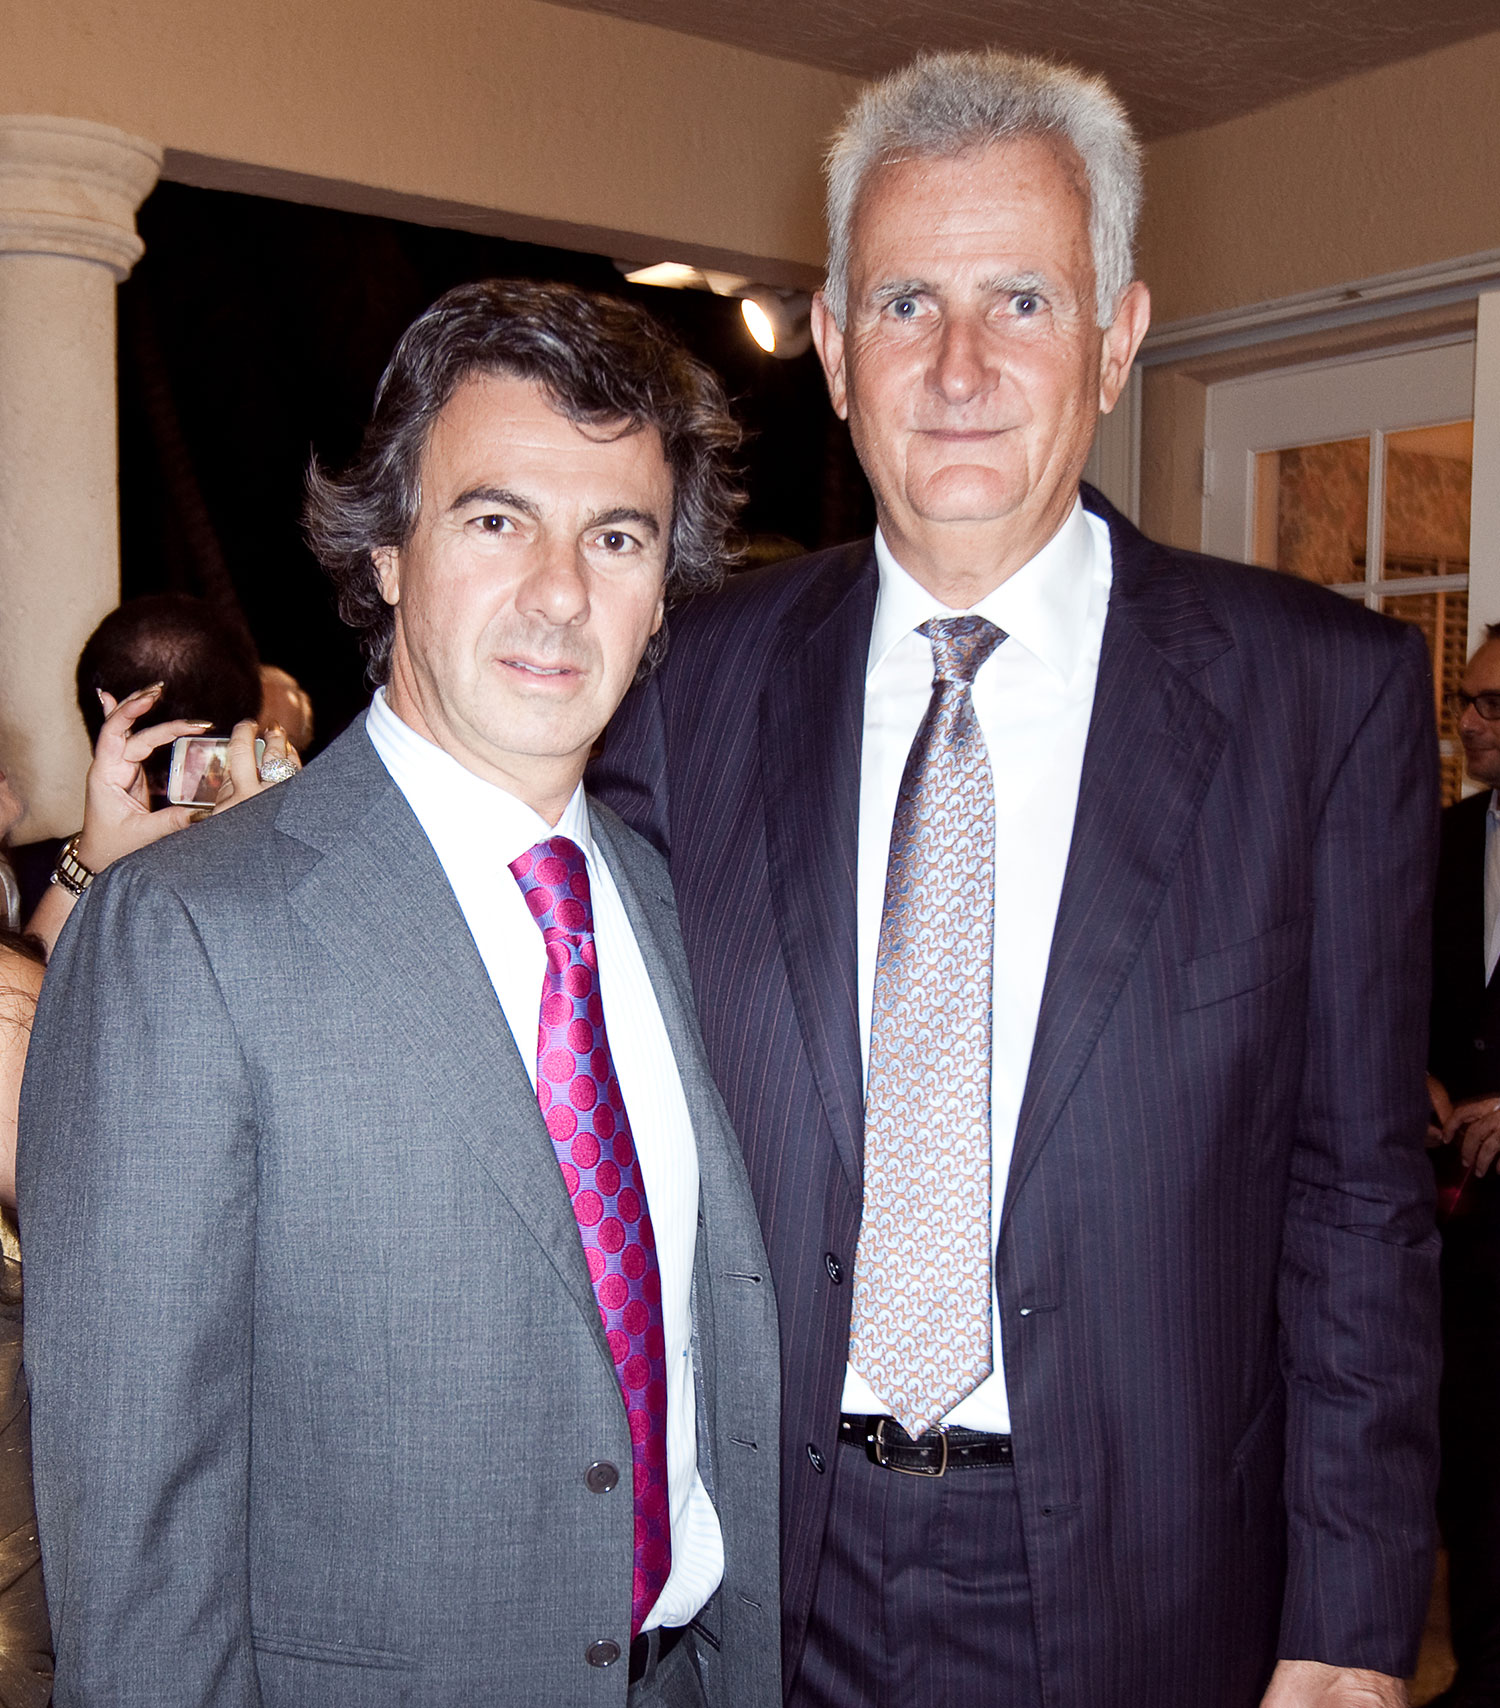 Ugo Colombo and Italian Consul General, the Honorable Adolfo Barattolo